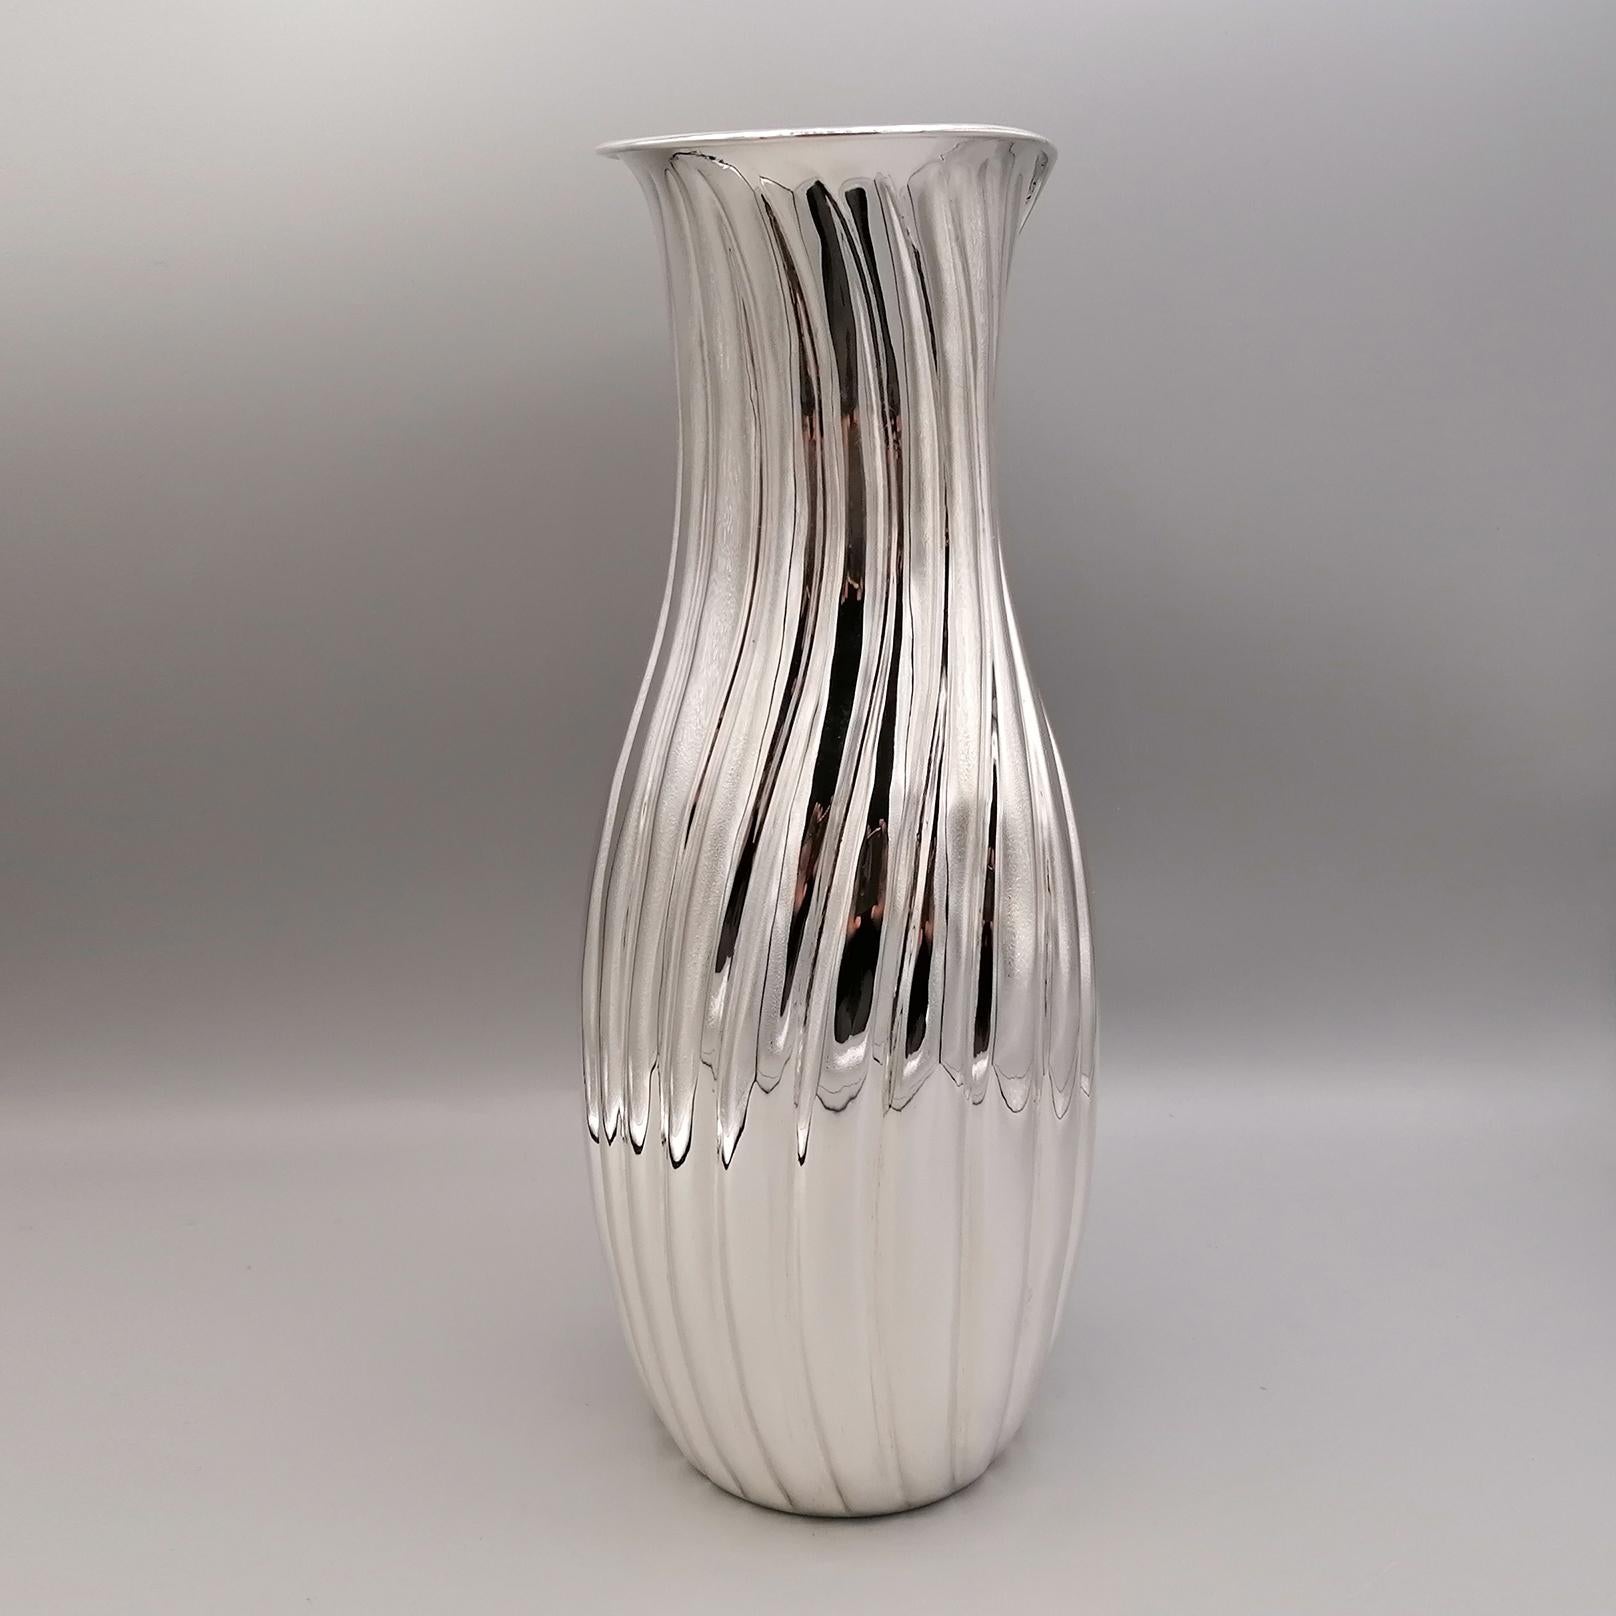 Contemporary 21st Century Italian Solid Silver Vase